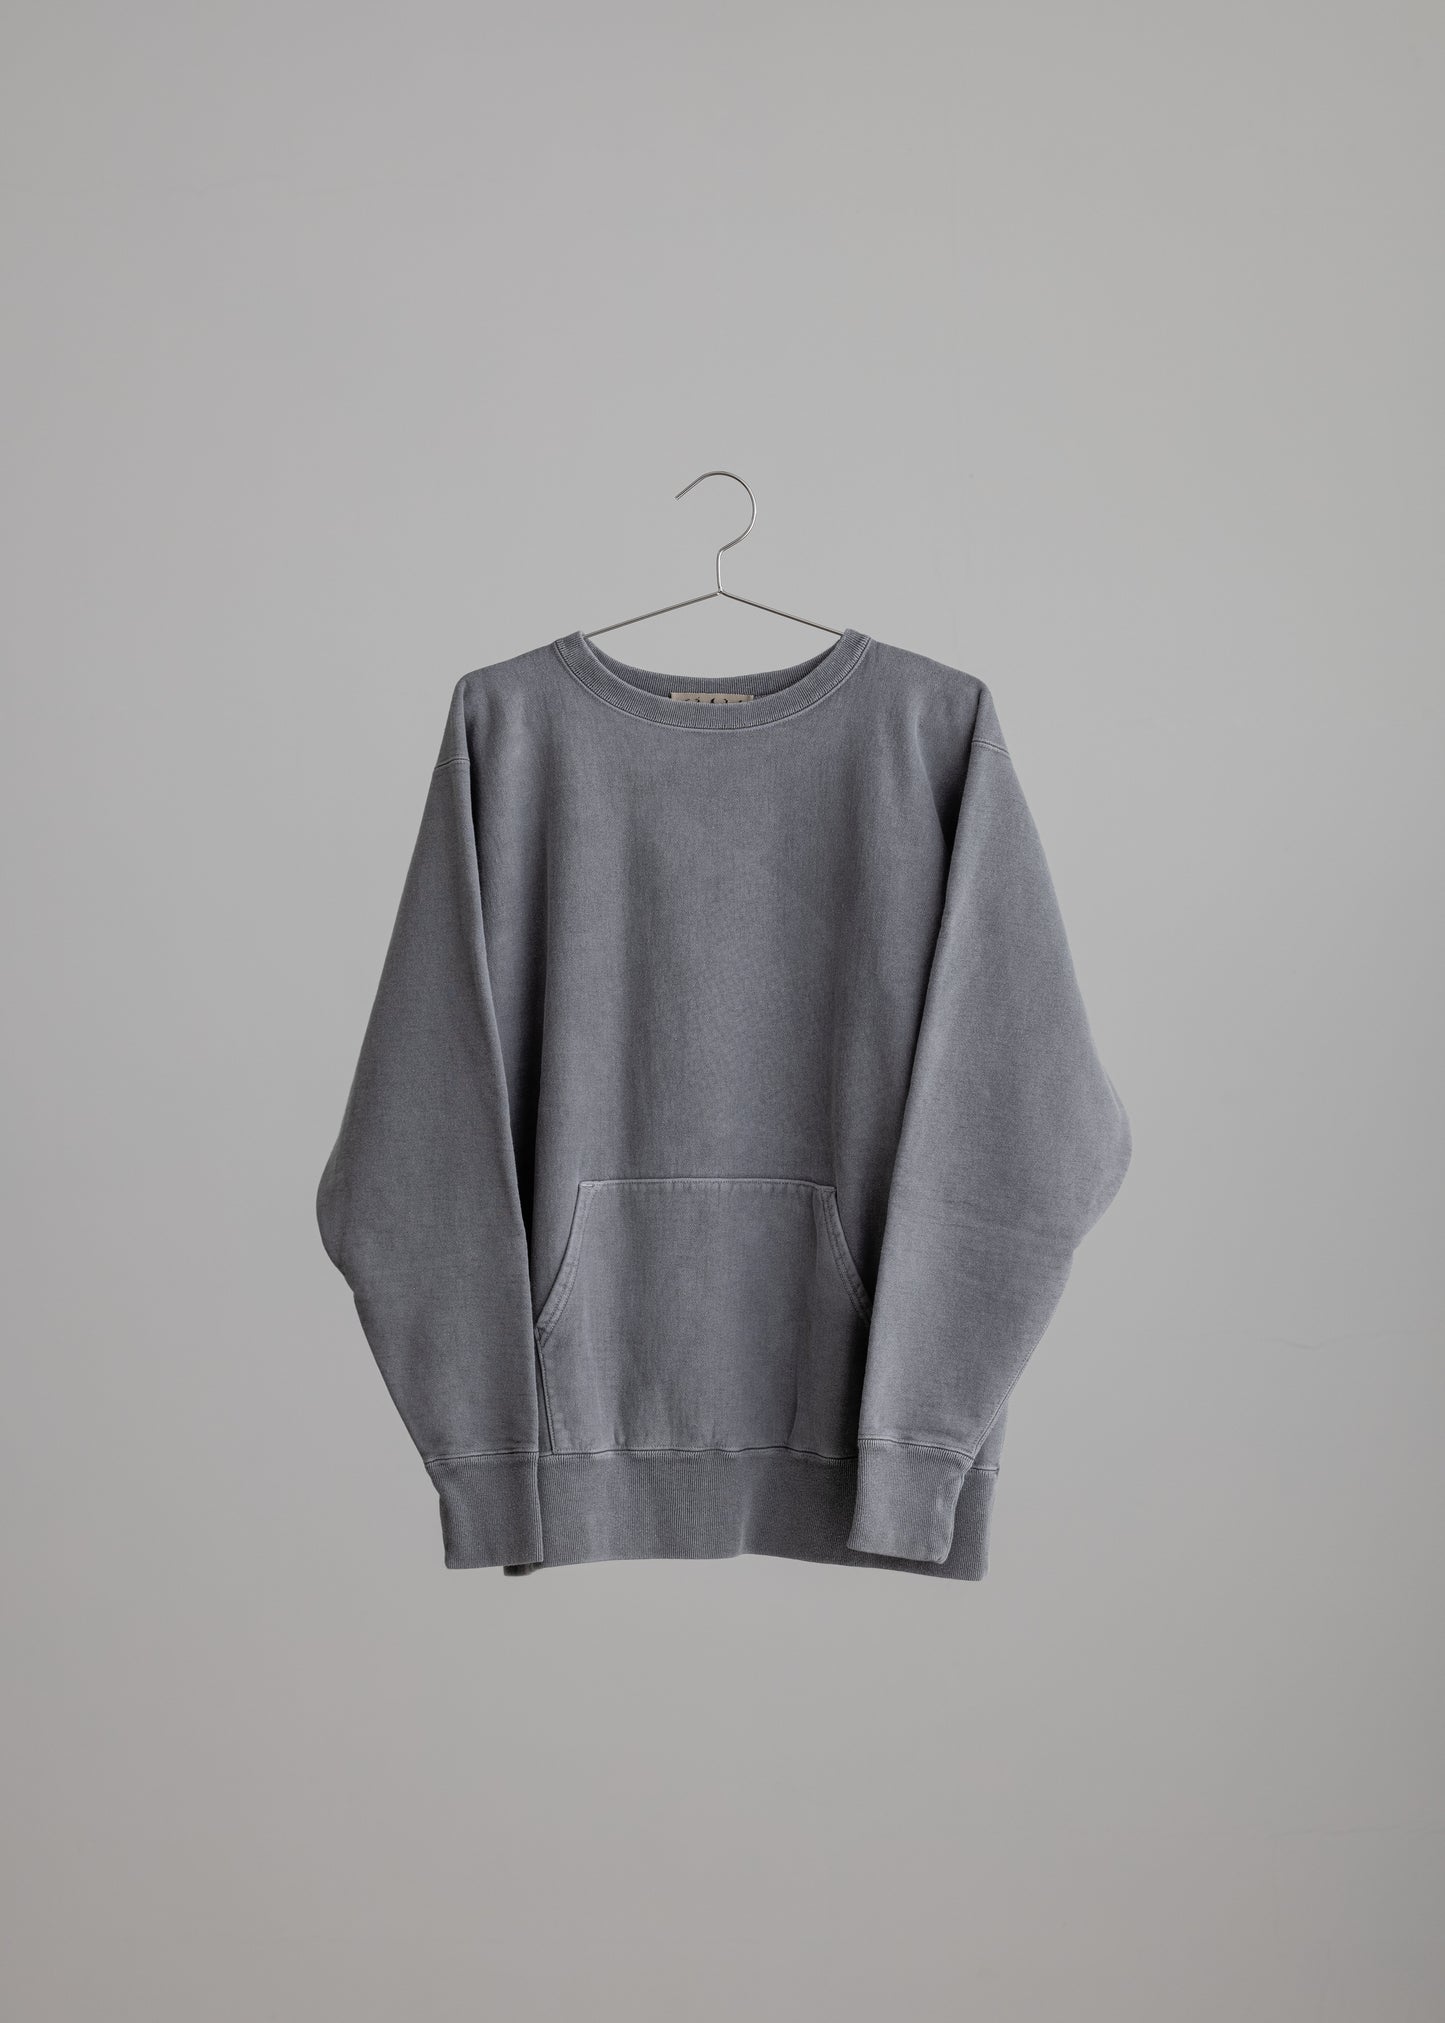 [ HAM IAM ] Regulations " SUMI garment dyed 炭染め " classic athletic sweat shirt c/# dyed mid grey